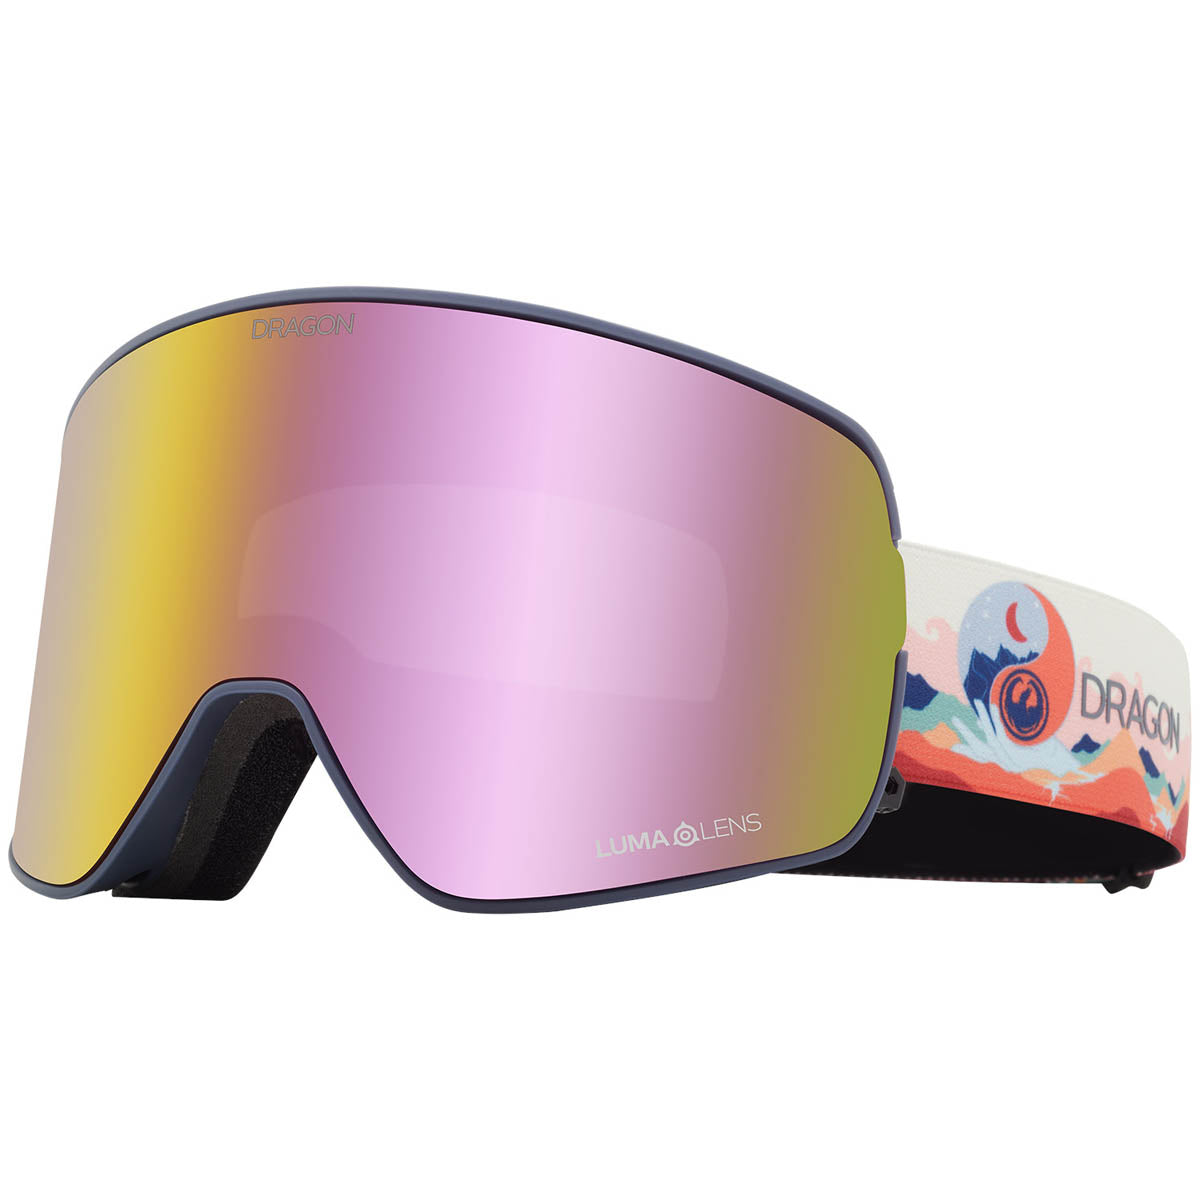 Dragon Nfx2 Snowboard Goggles - Fasani/Lumalens Pink Ion image 1